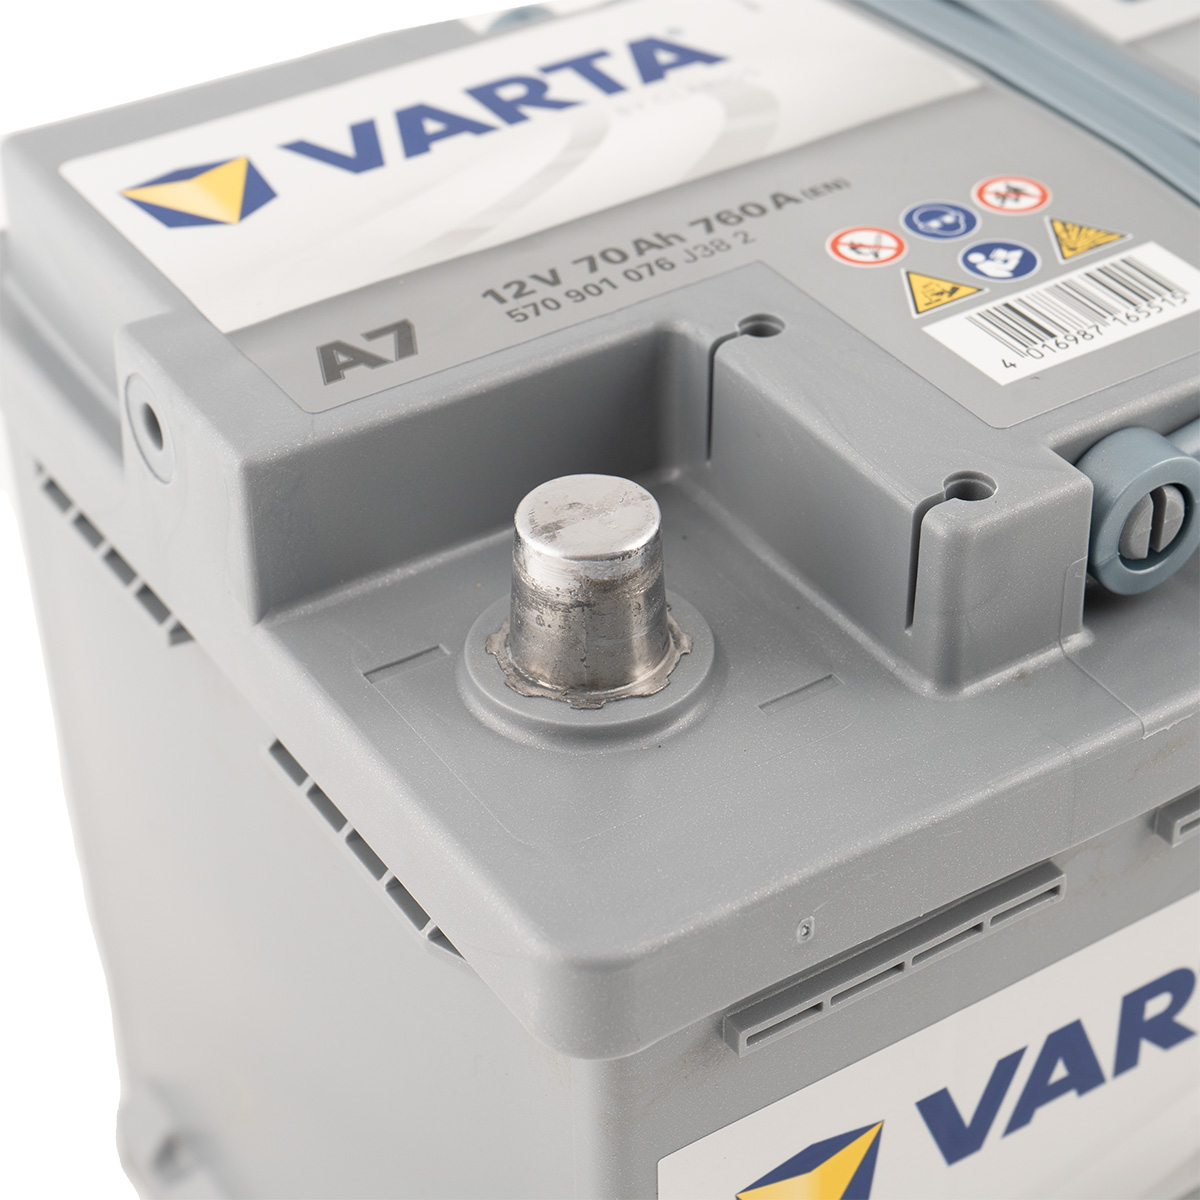 VARTA Starterbatterie 70Ah E39 (A7) Silver Dynamic AGM xEV 570 901 076  570901076J382 günstig online kaufen